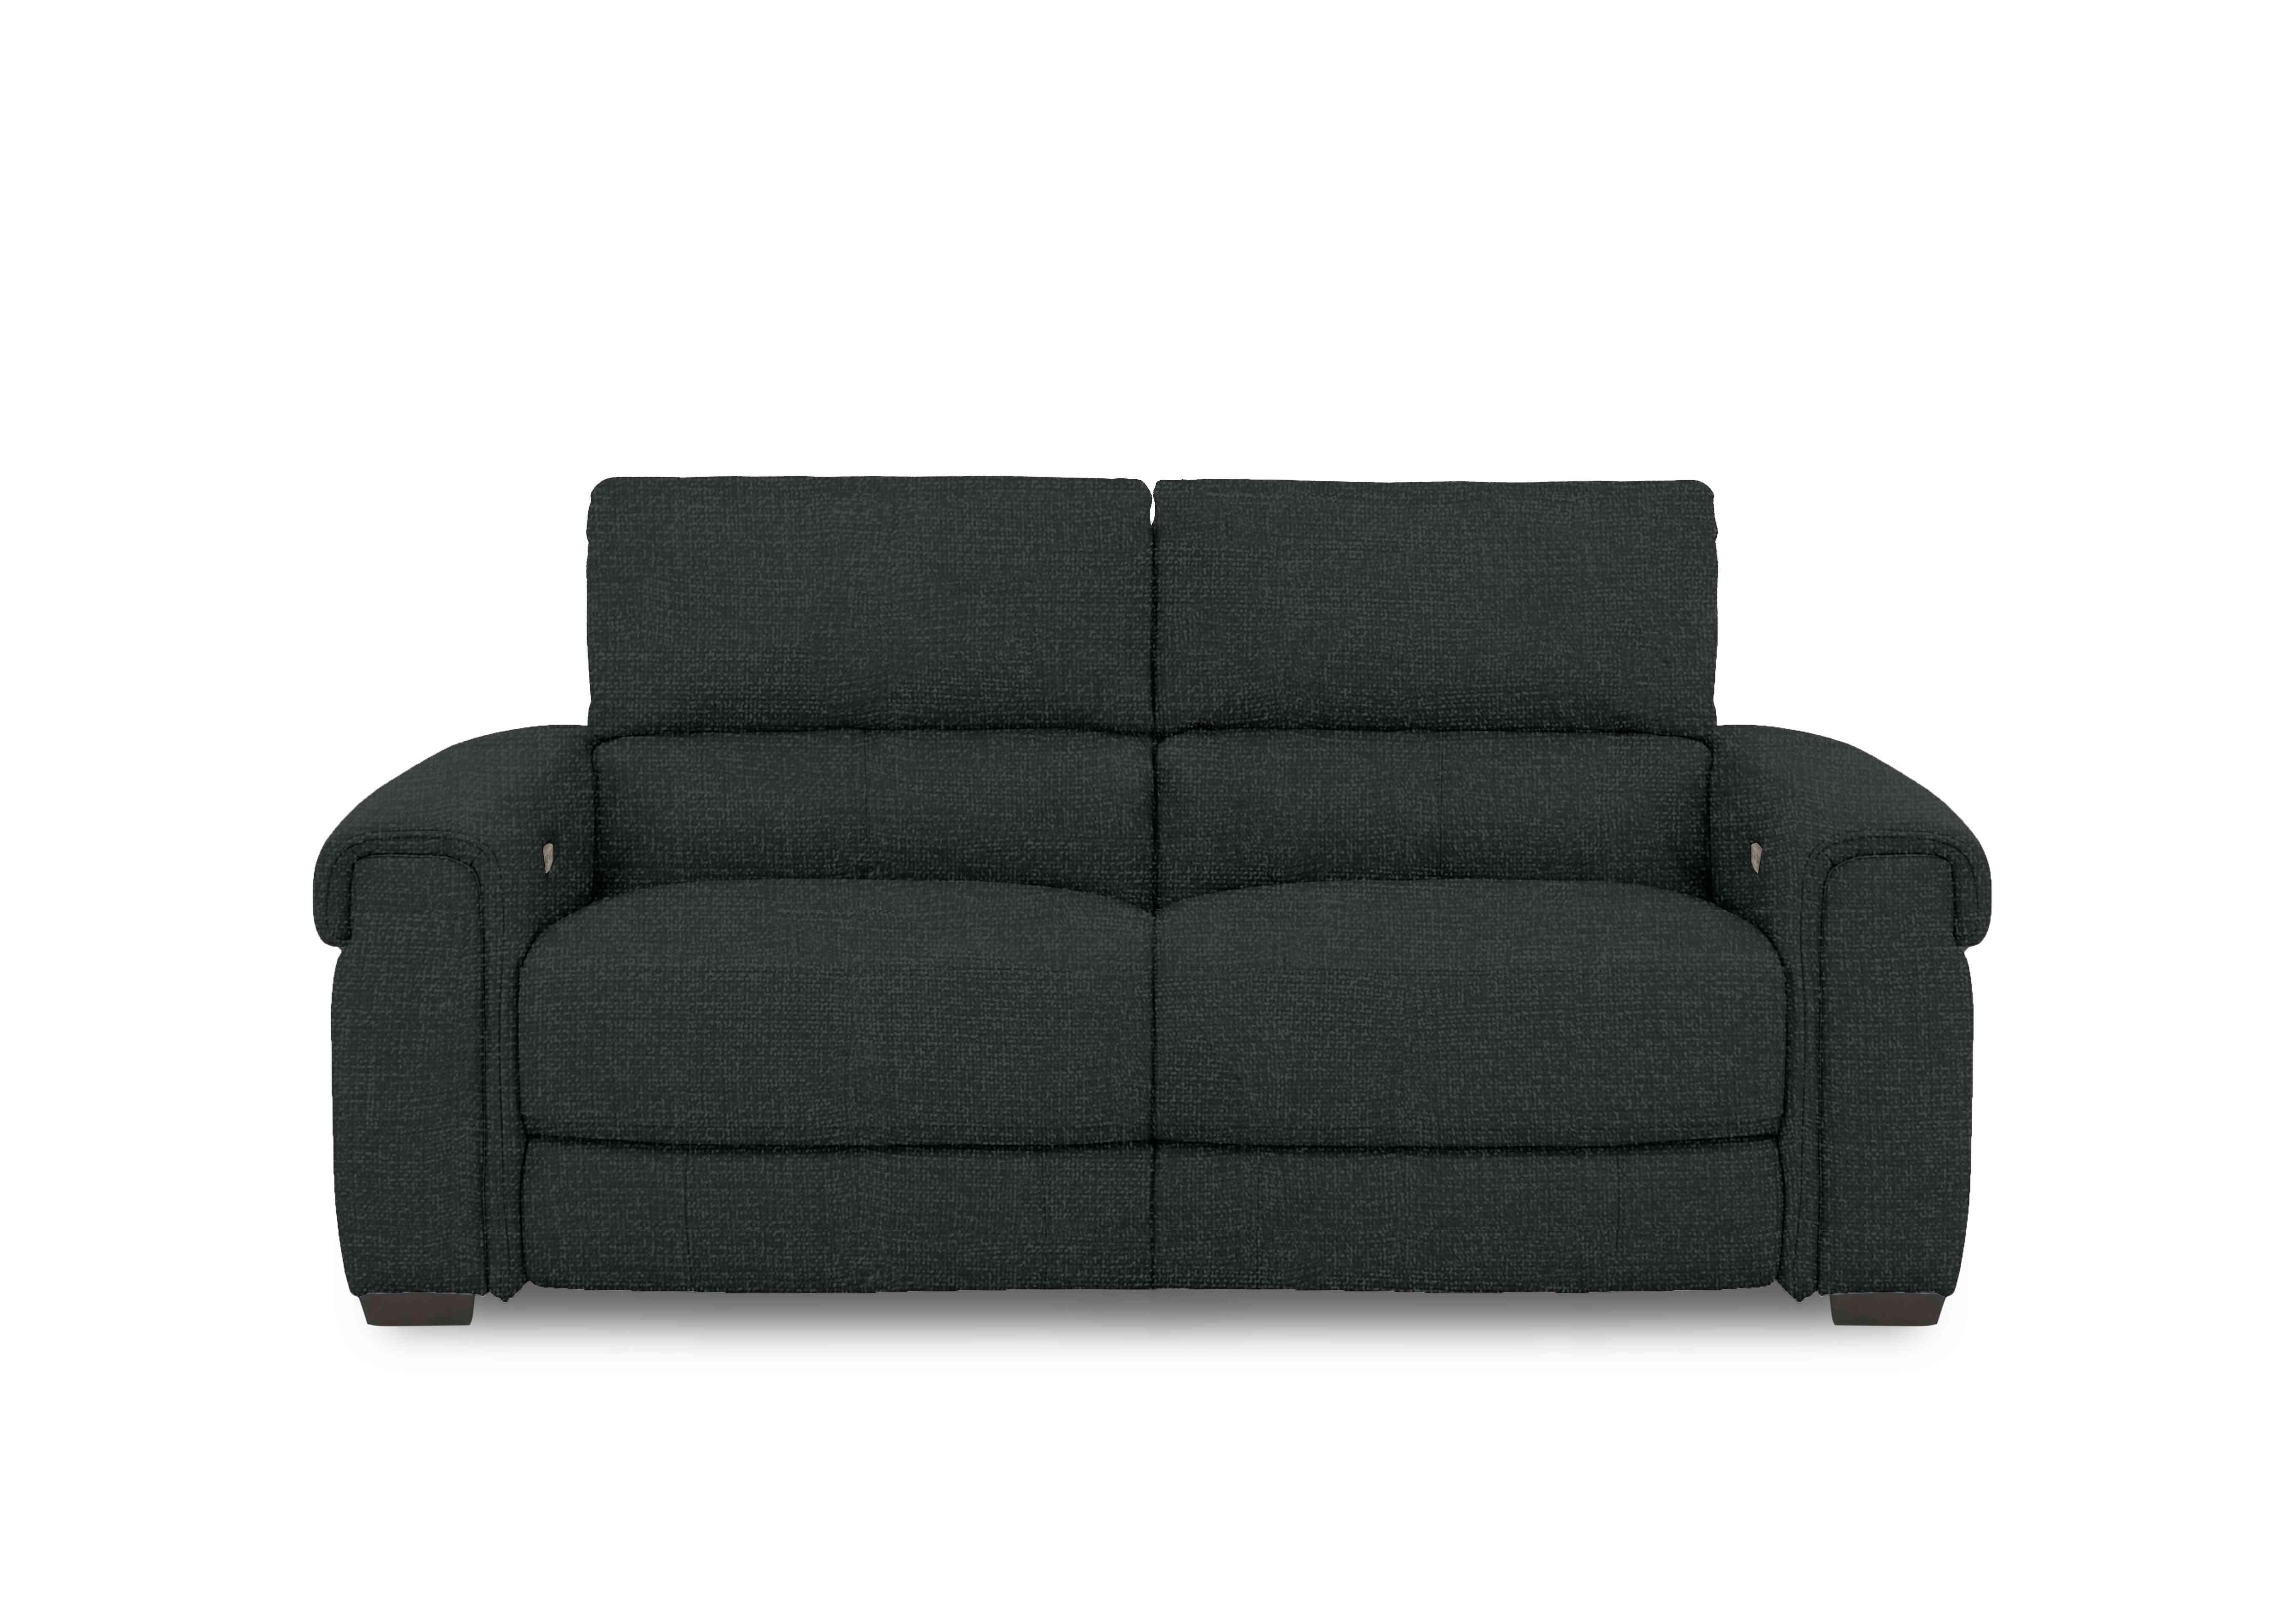 Nixon Fabric 3 Seater Sofa in Fab-Cac-R463 Black Mica on Furniture Village